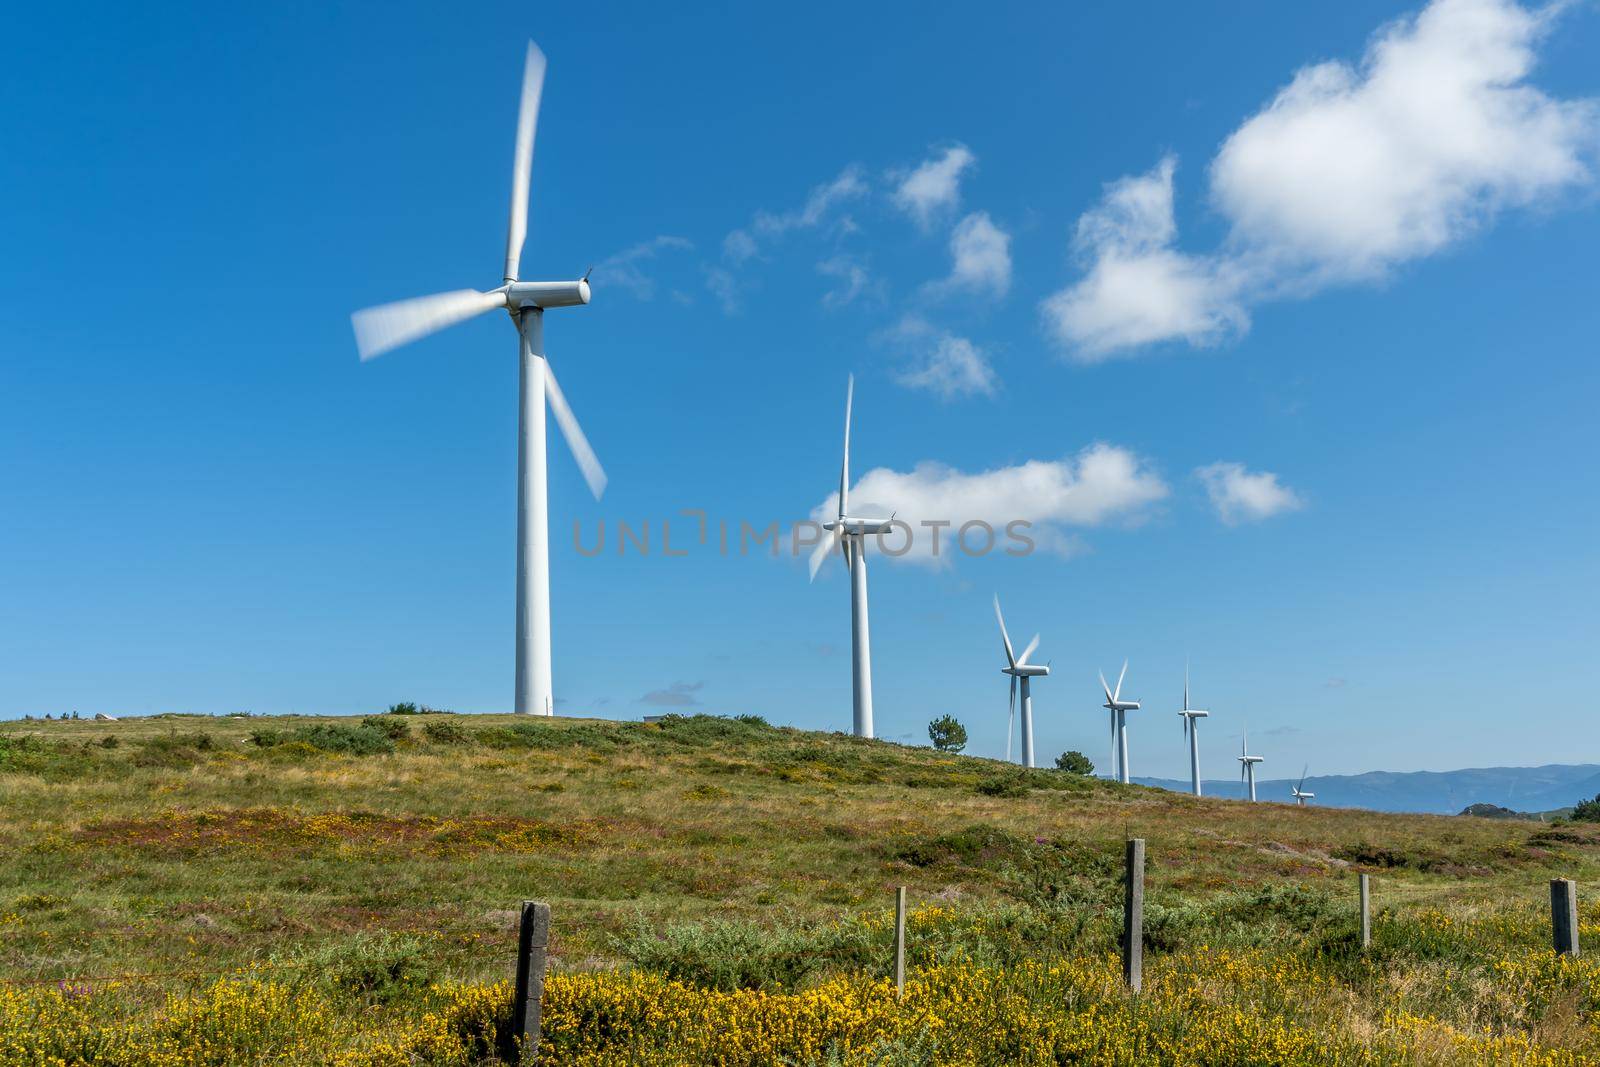 View of wind turbines energy production near the Atlantic Ocean, Spain. by maramade